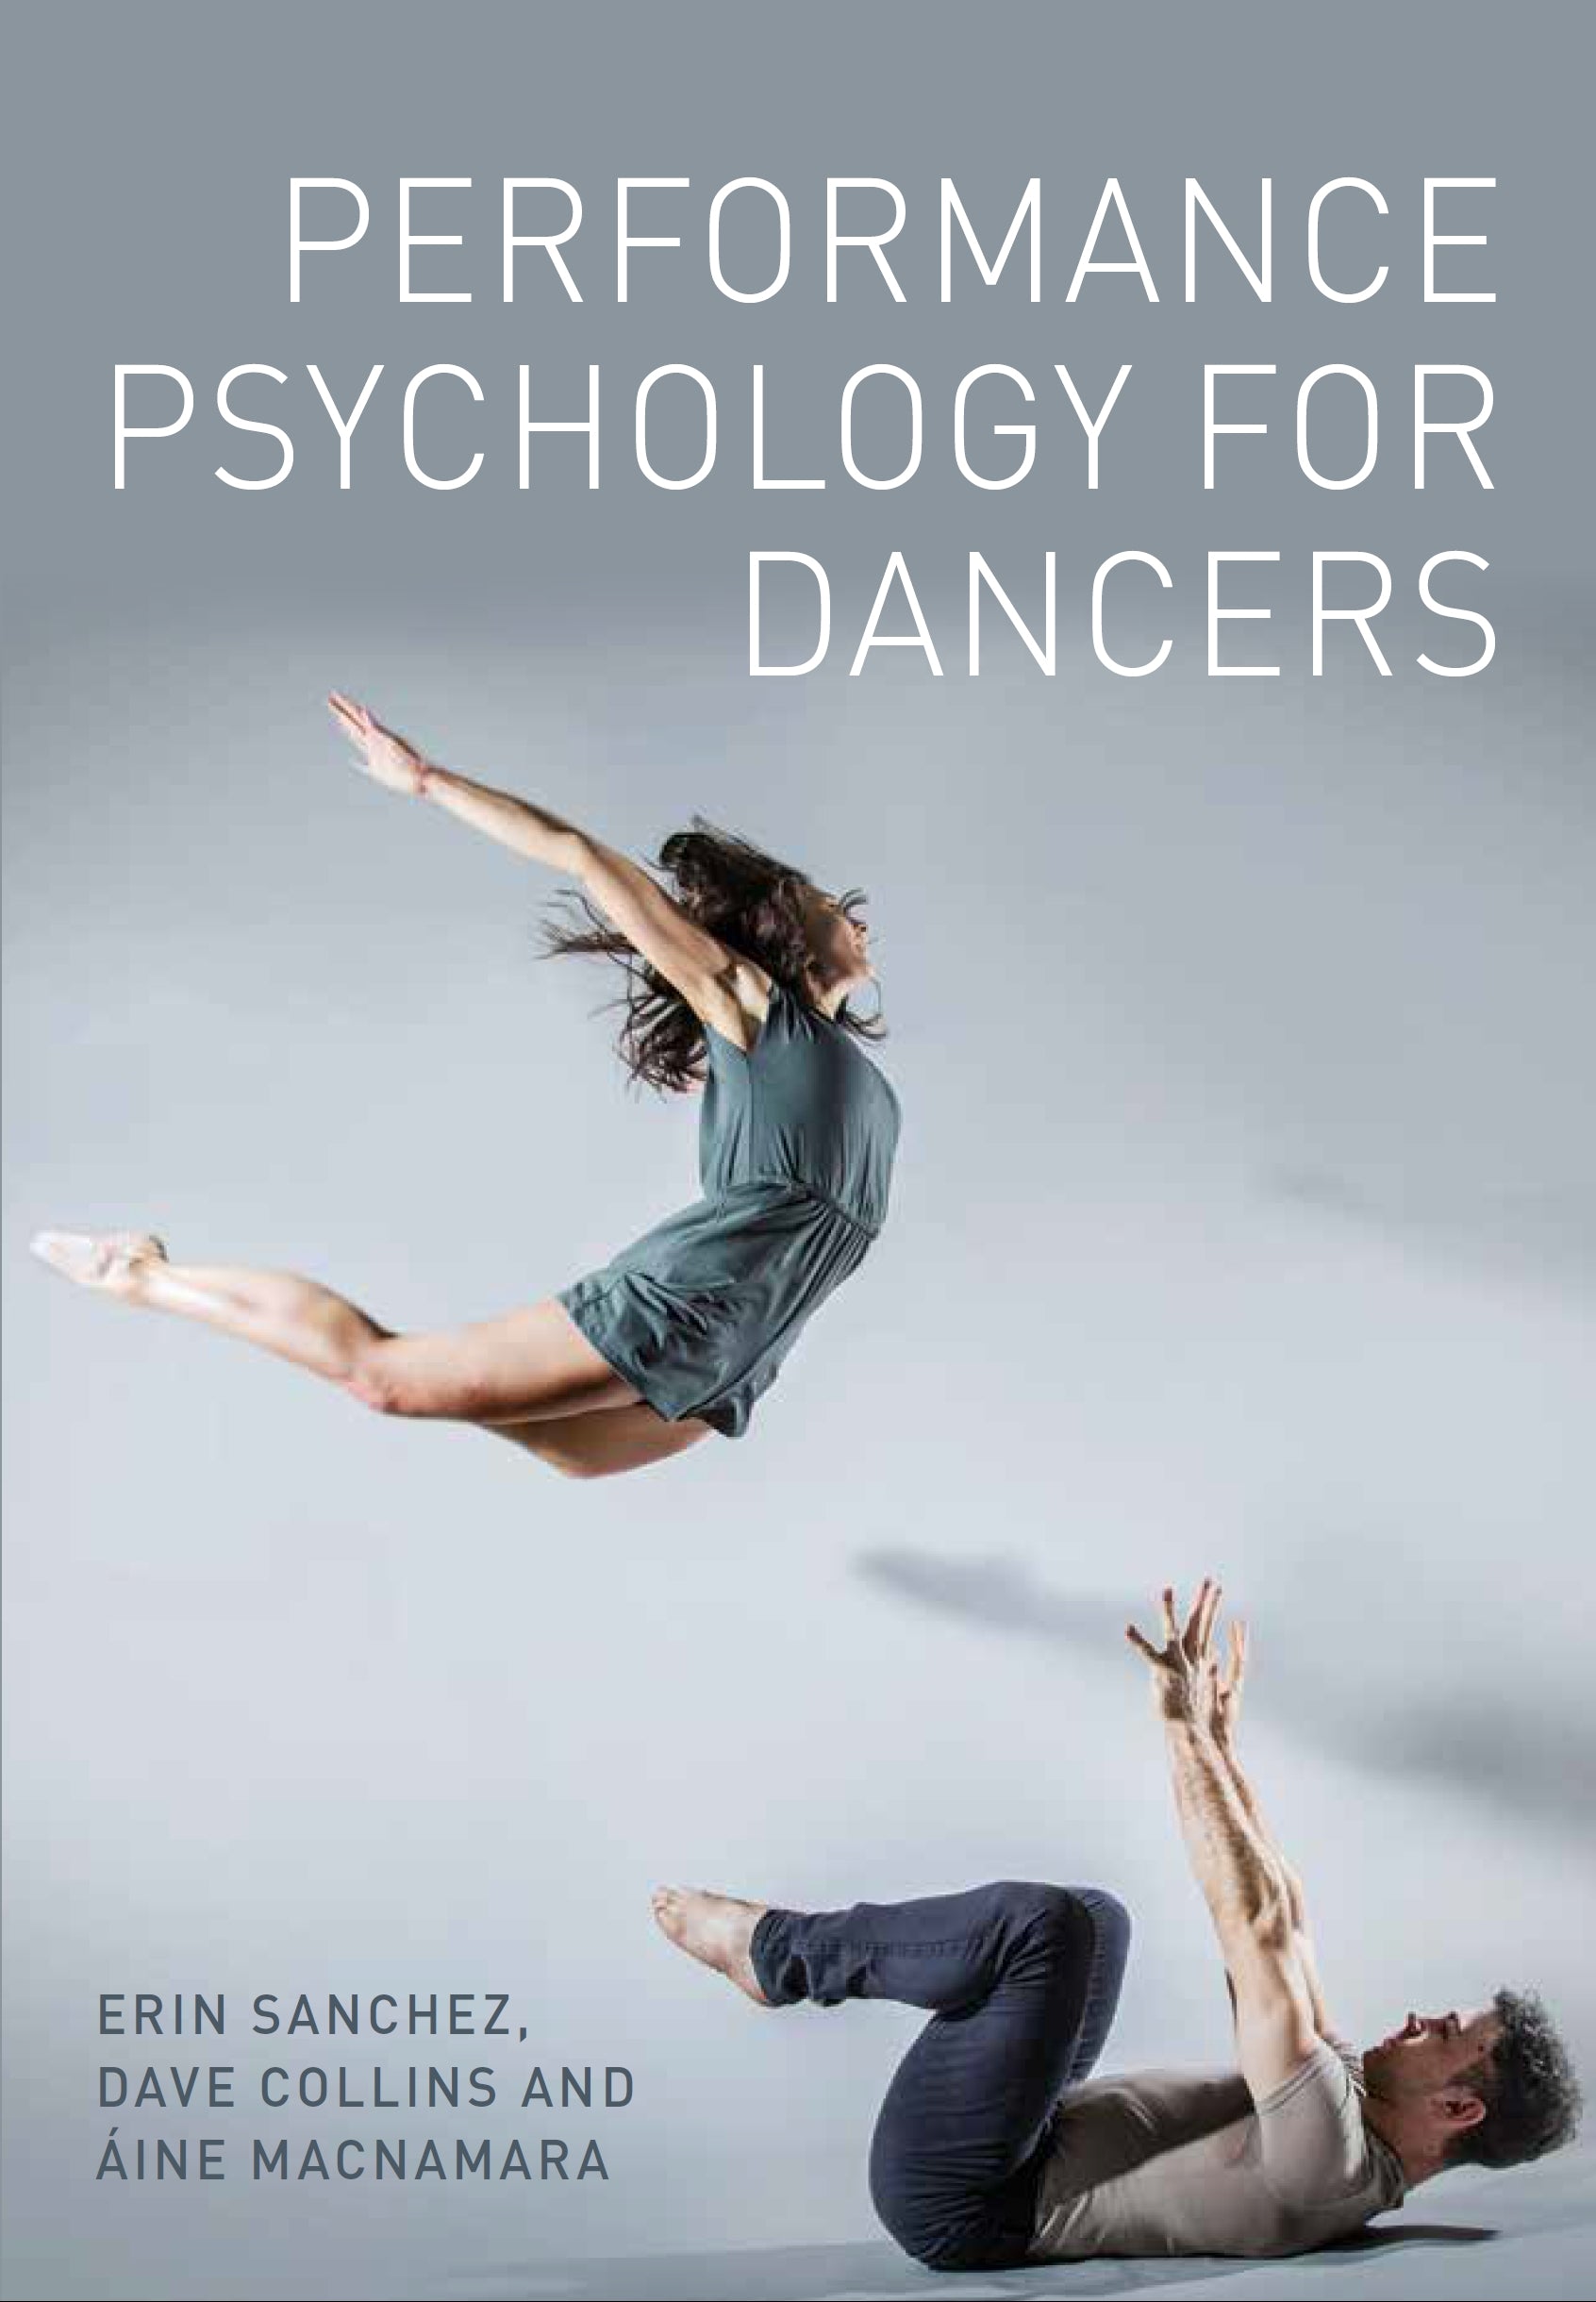 Performance Psychology for Dancers